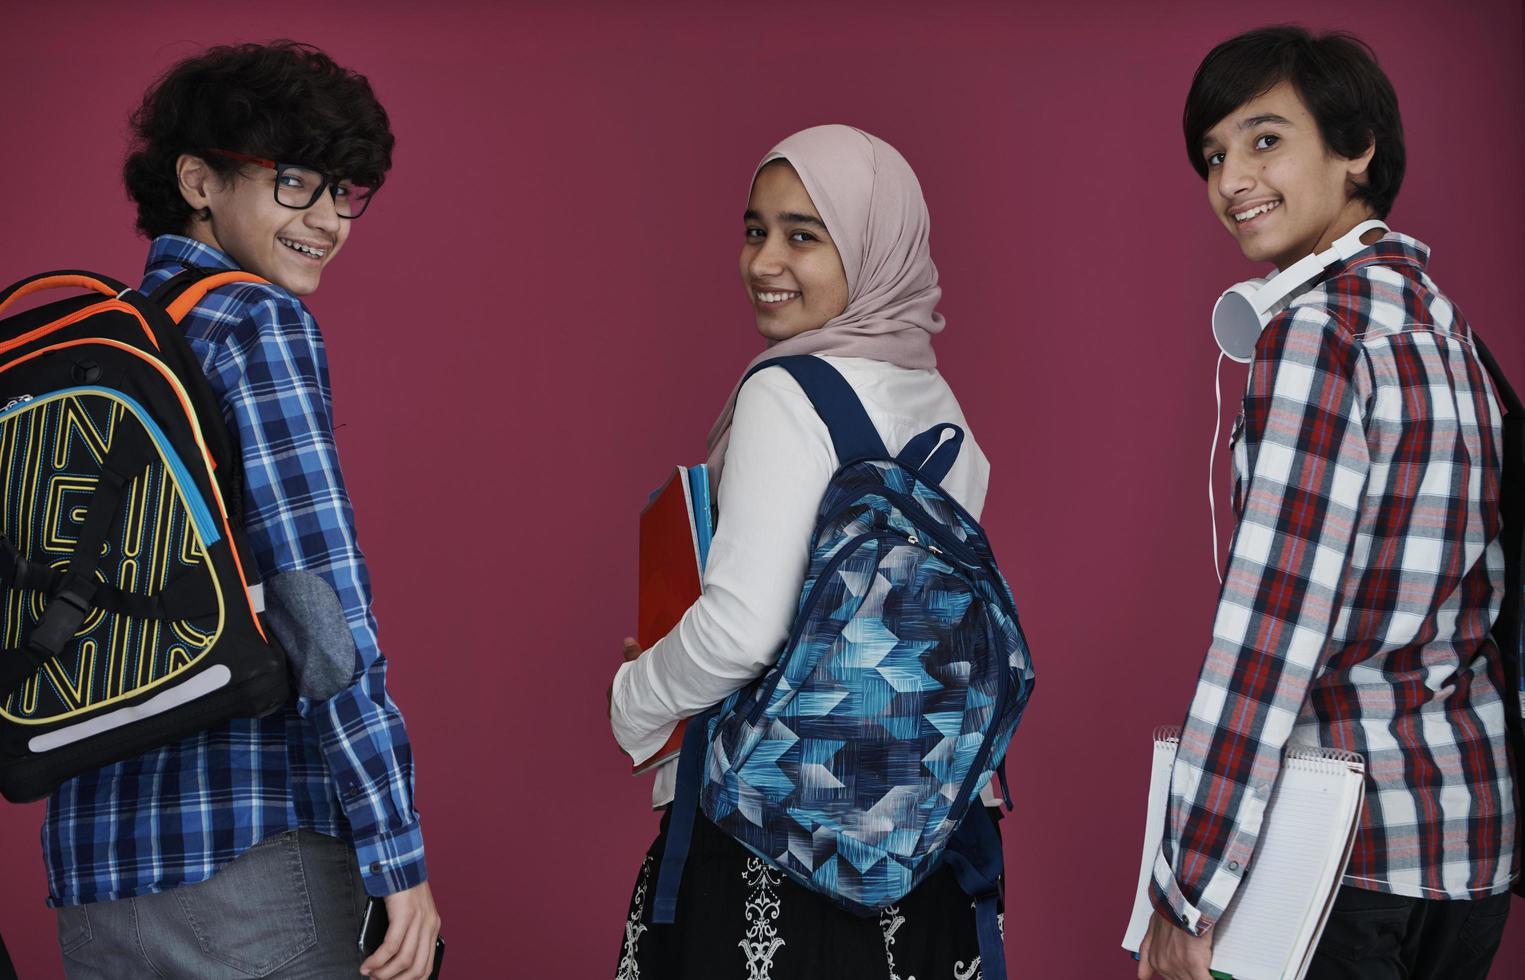 Arab teens group photo